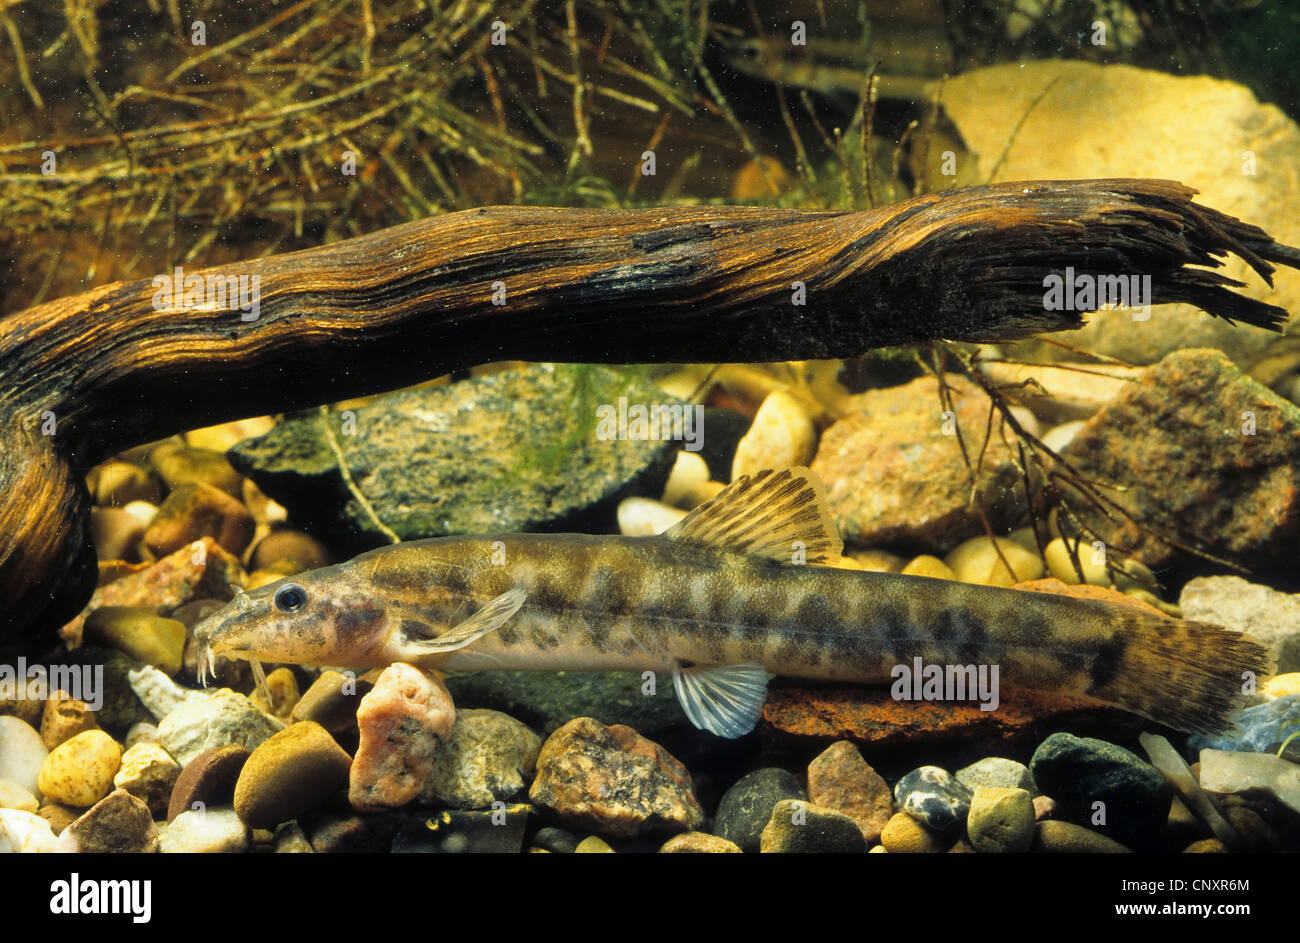 stone loach (Noemacheilus barbulatus, Barbatula barbatula, Nemacheilus barbatulus), swimming close to the pebble ground of a river, Germany Stock Photo